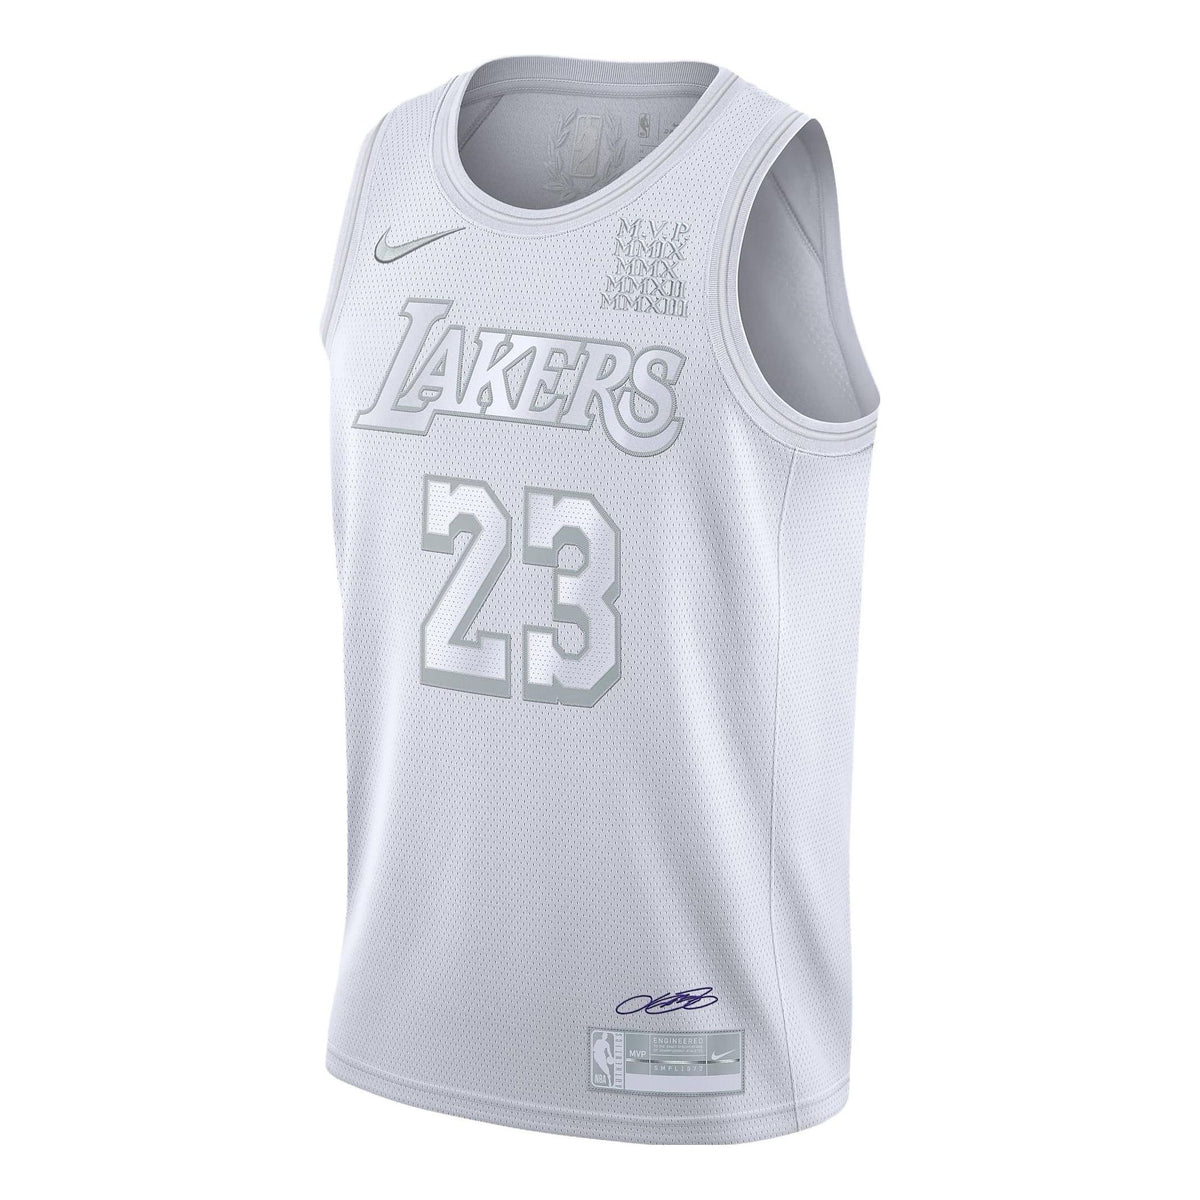 NWT LA Lakers LeBron James Authentic Nike Vapor Knit Home Jersey